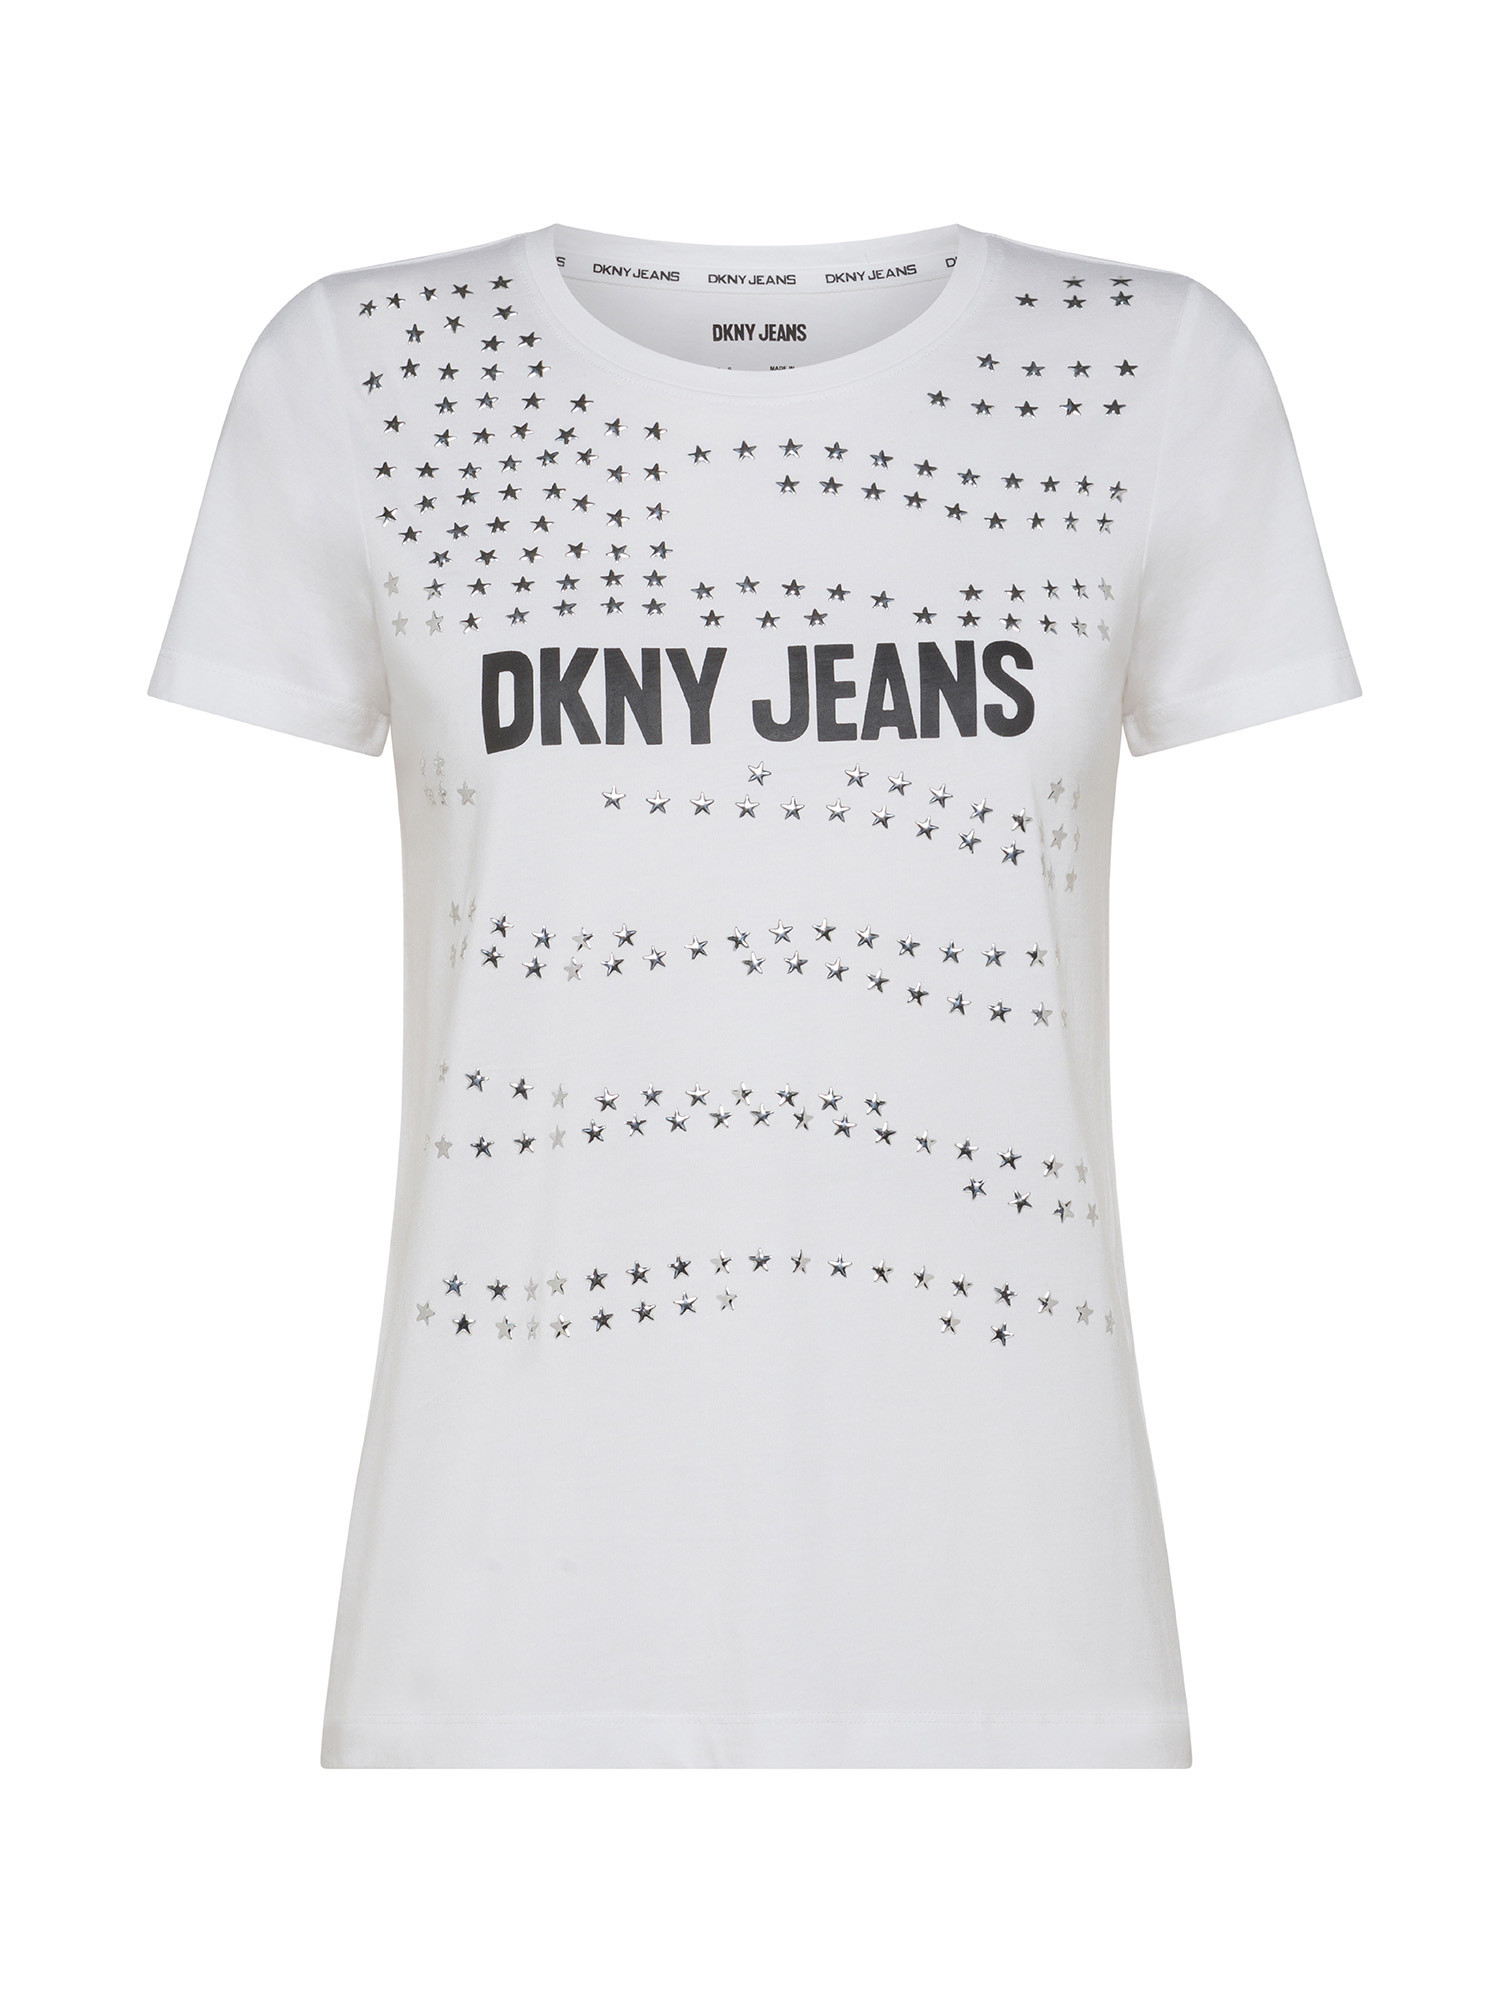 DKNY - T-shirt con logo, Bianco, large image number 0